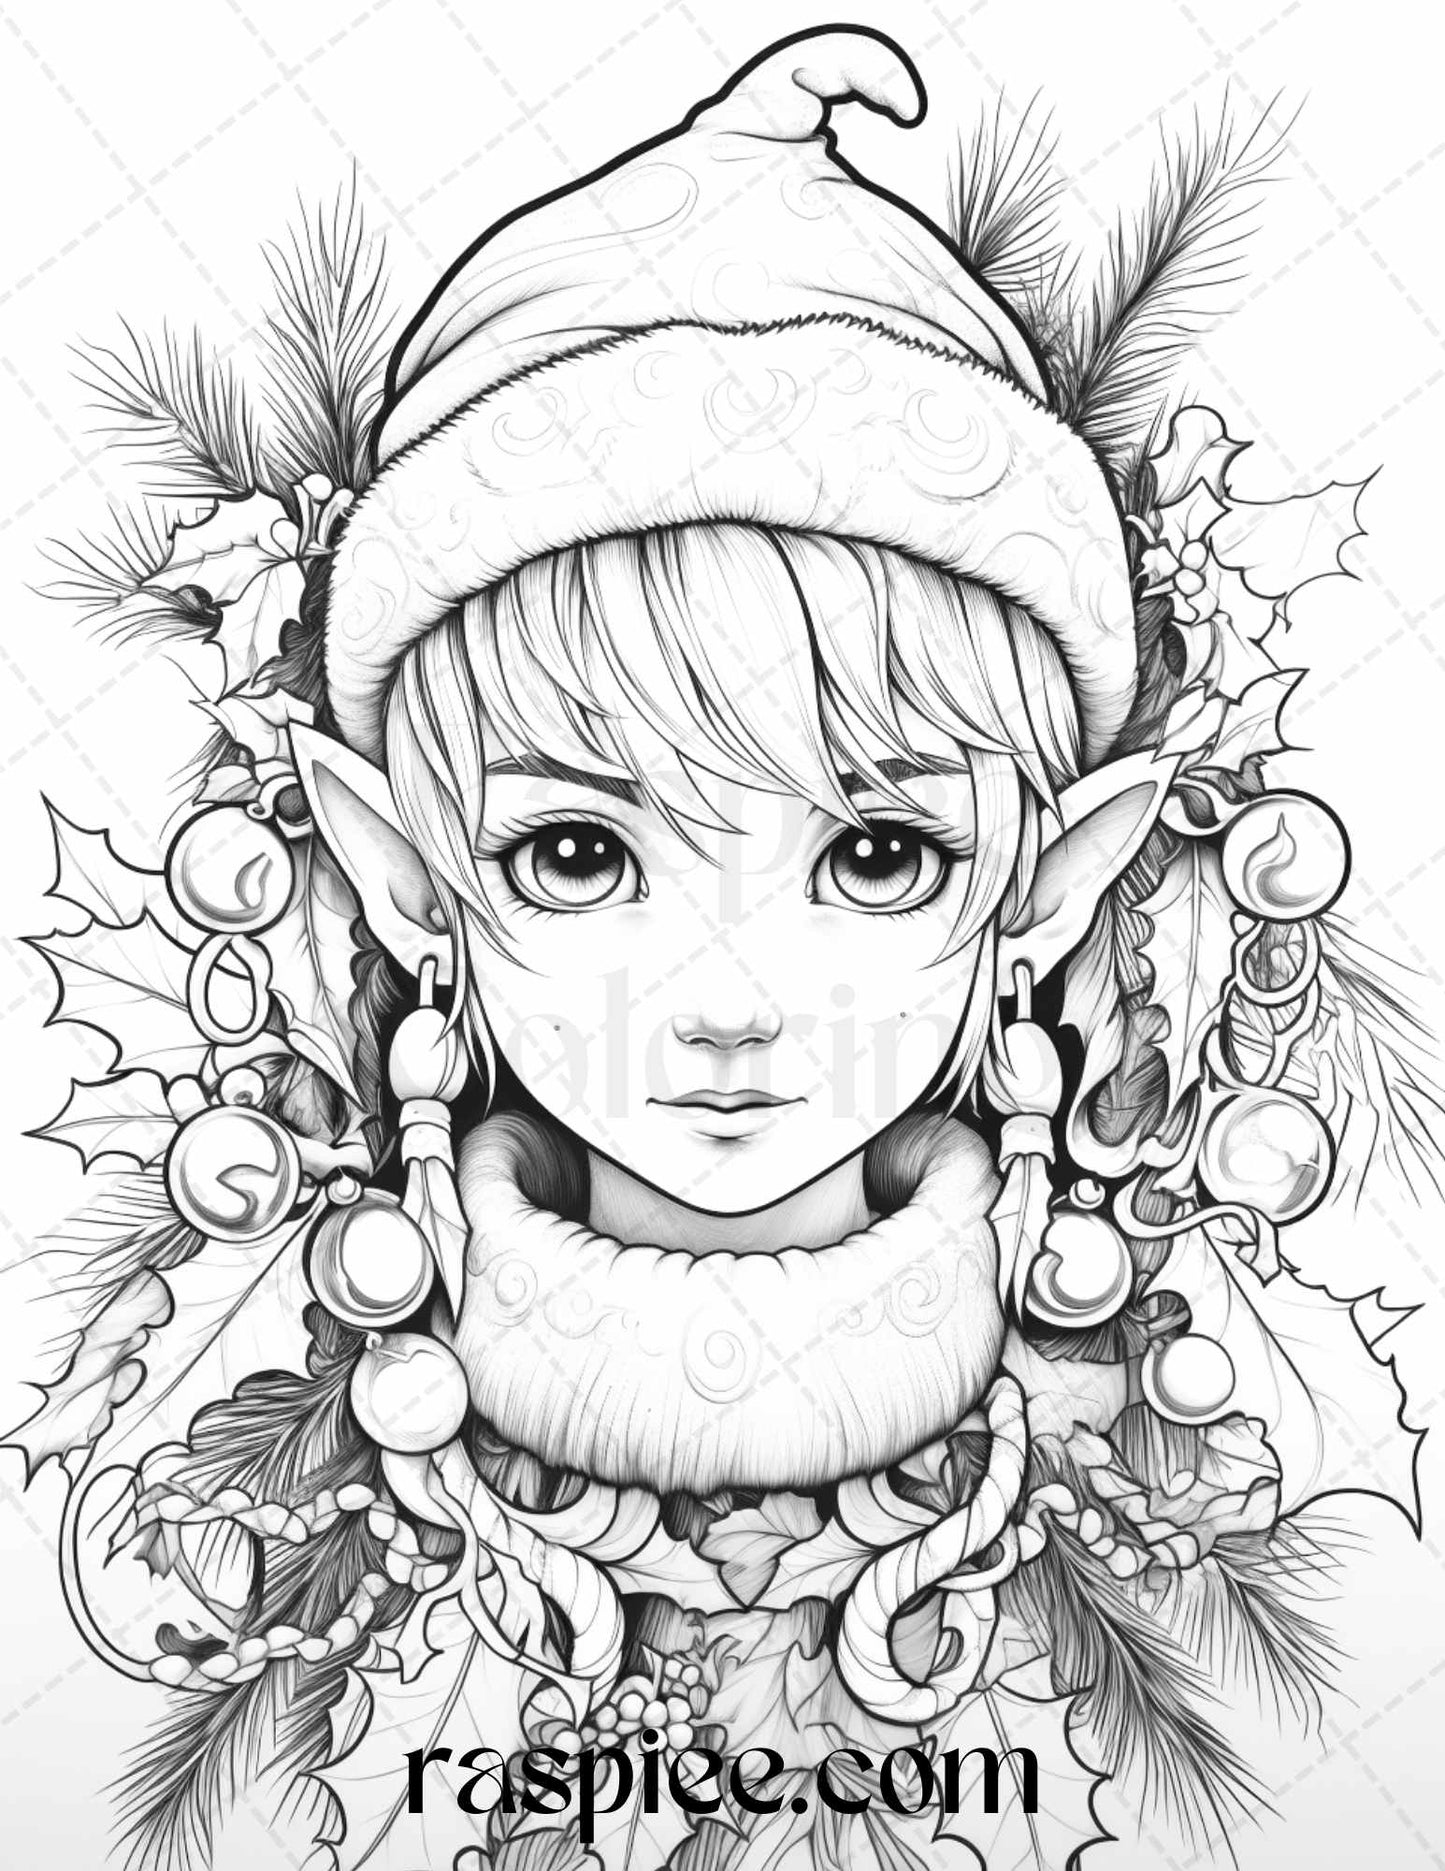 Christmas elf grayscale coloring page printable